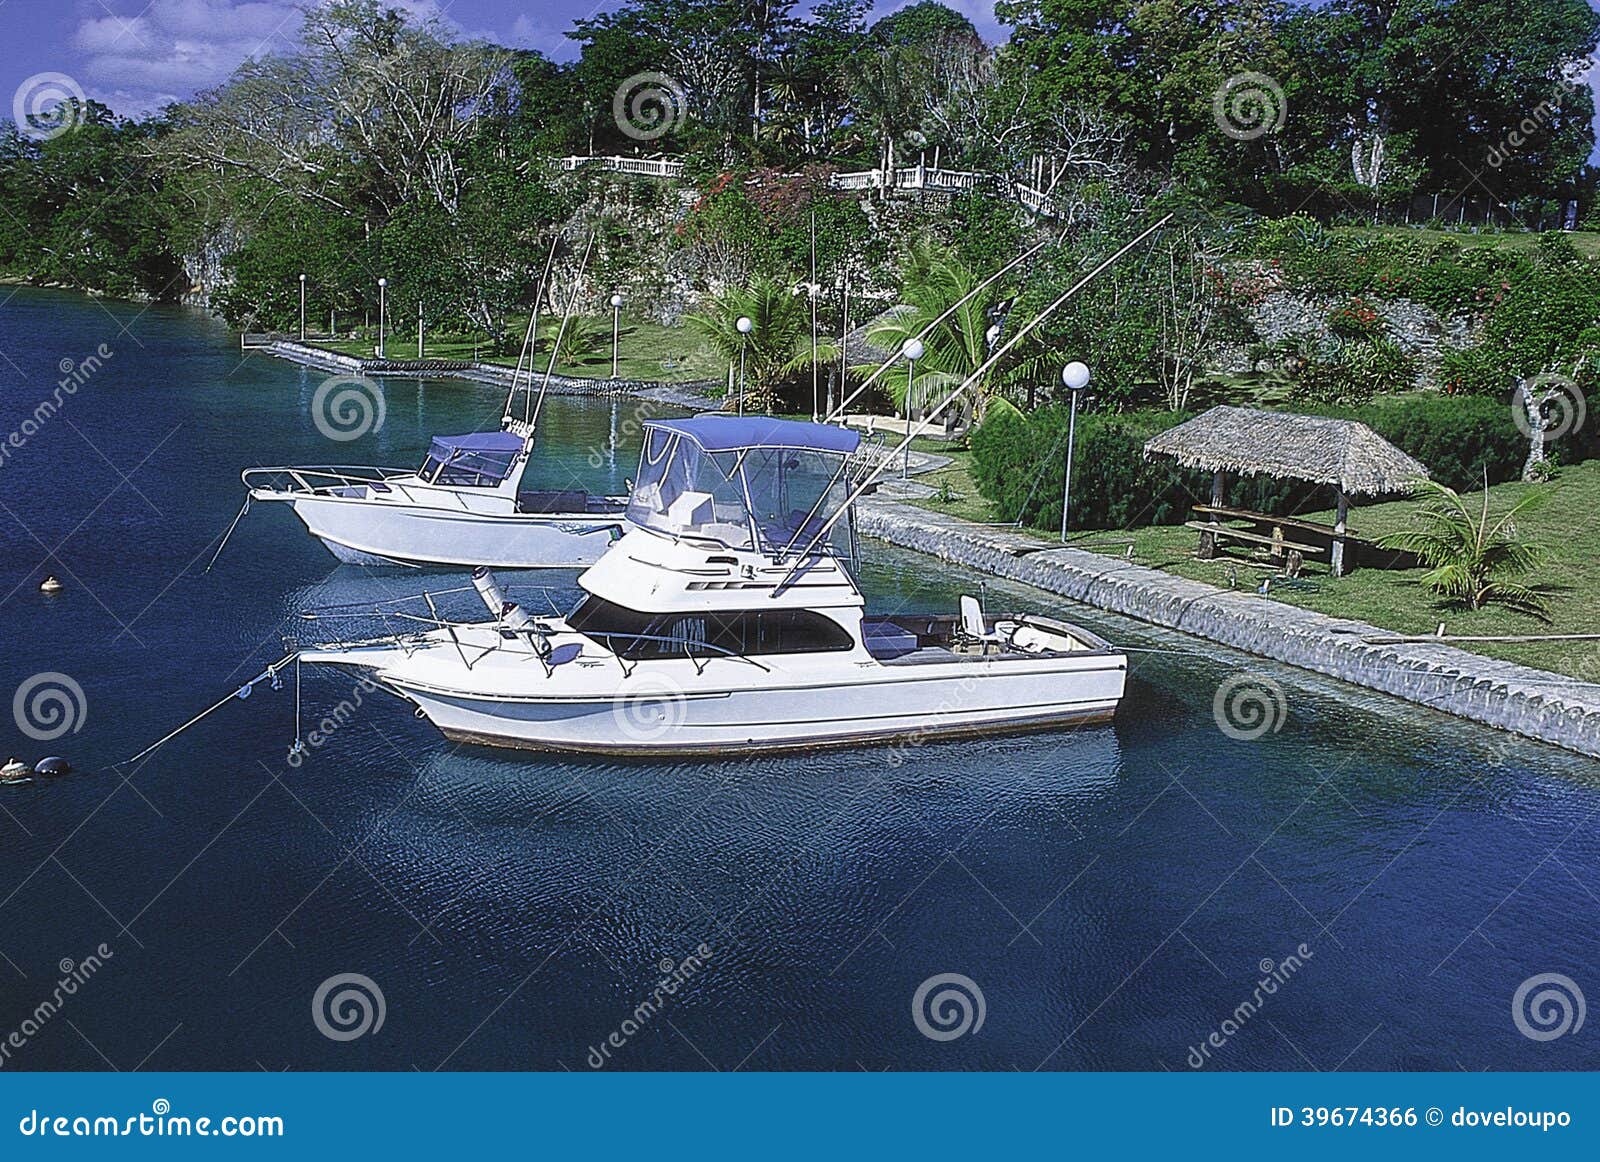 https://thumbs.dreamstime.com/z/sport-fishing-boats-white-moored-tropical-island-setting-39674366.jpg